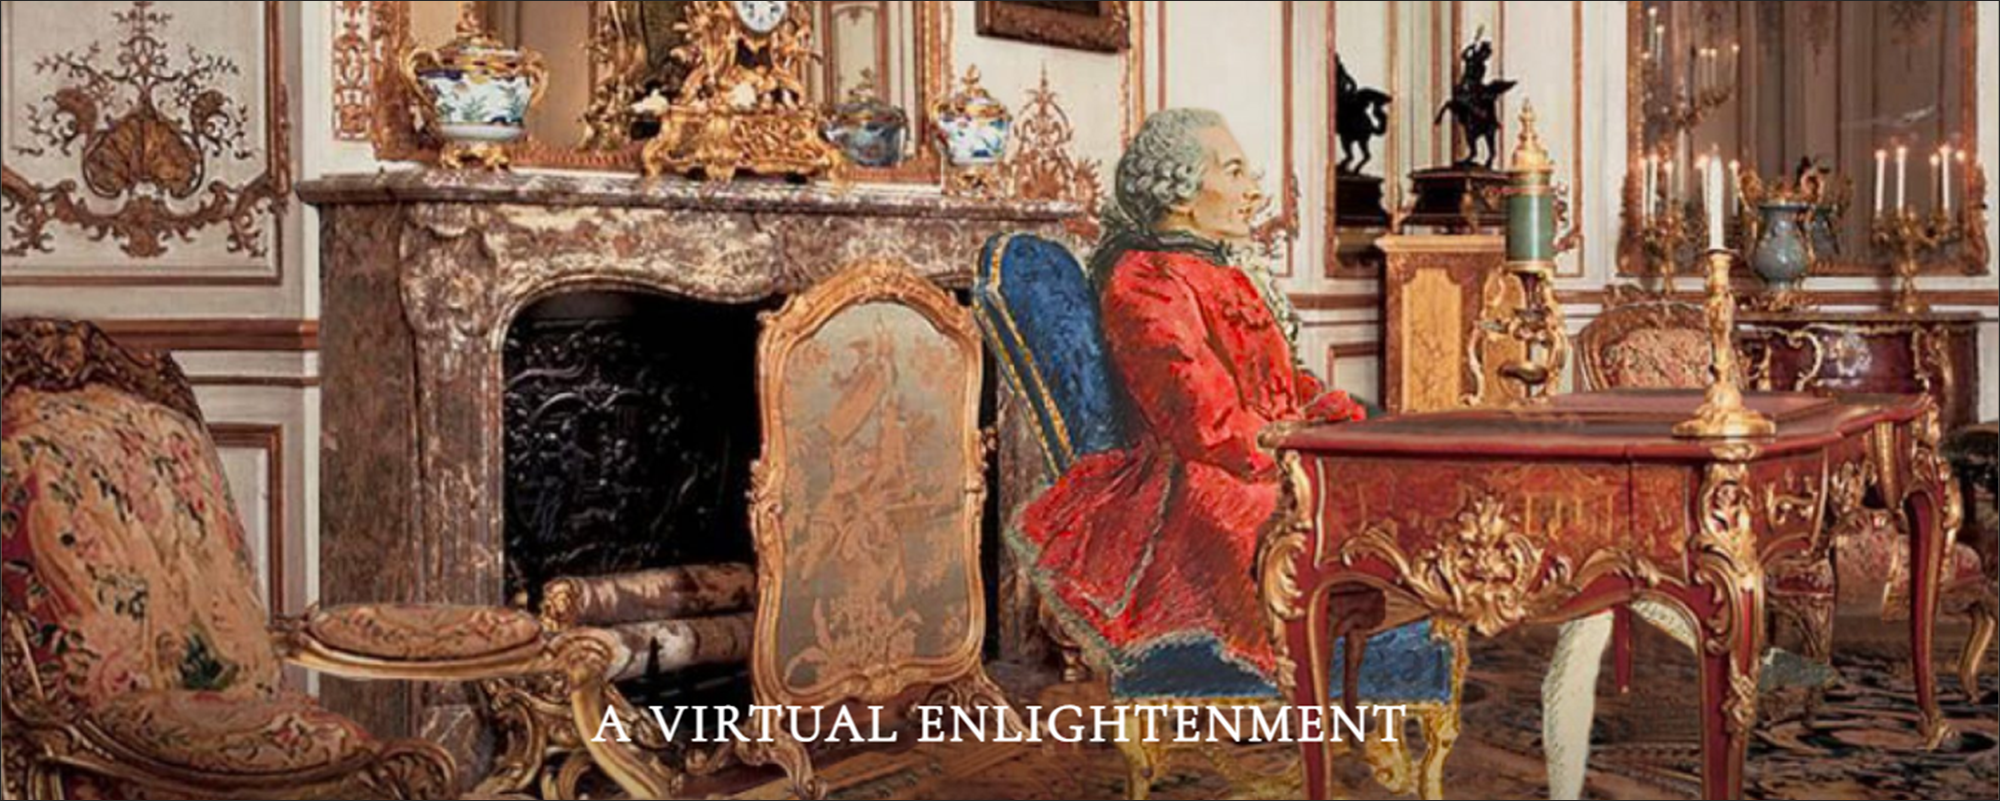 Screenshot of the course website, A Virtual Enlightenment